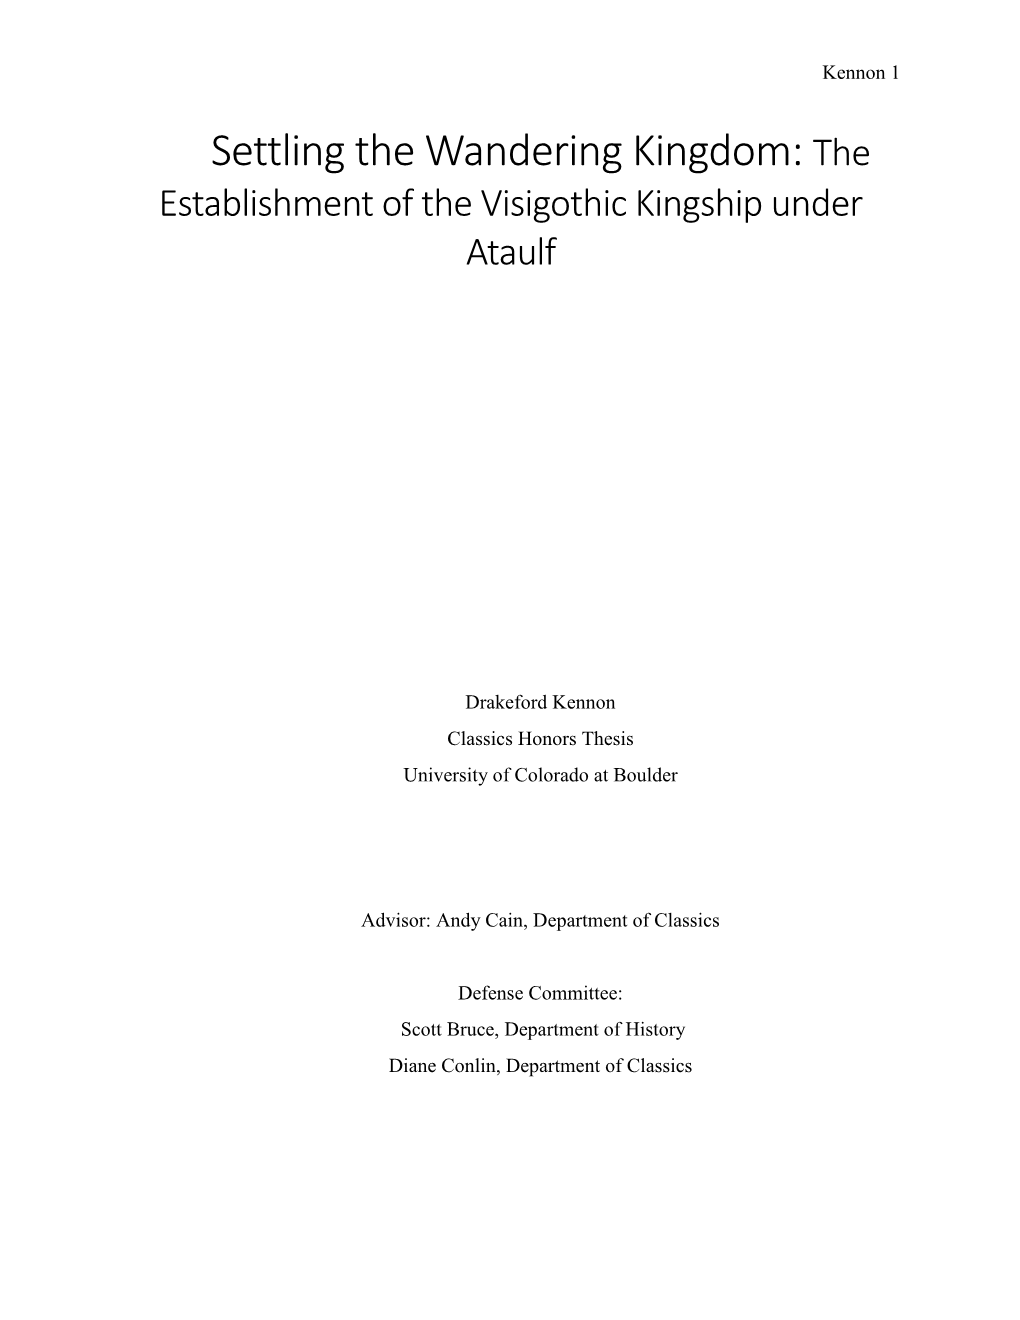 Settling the Wandering Kingdom: the Establishment of the Visigothic Kingship Under Ataulf